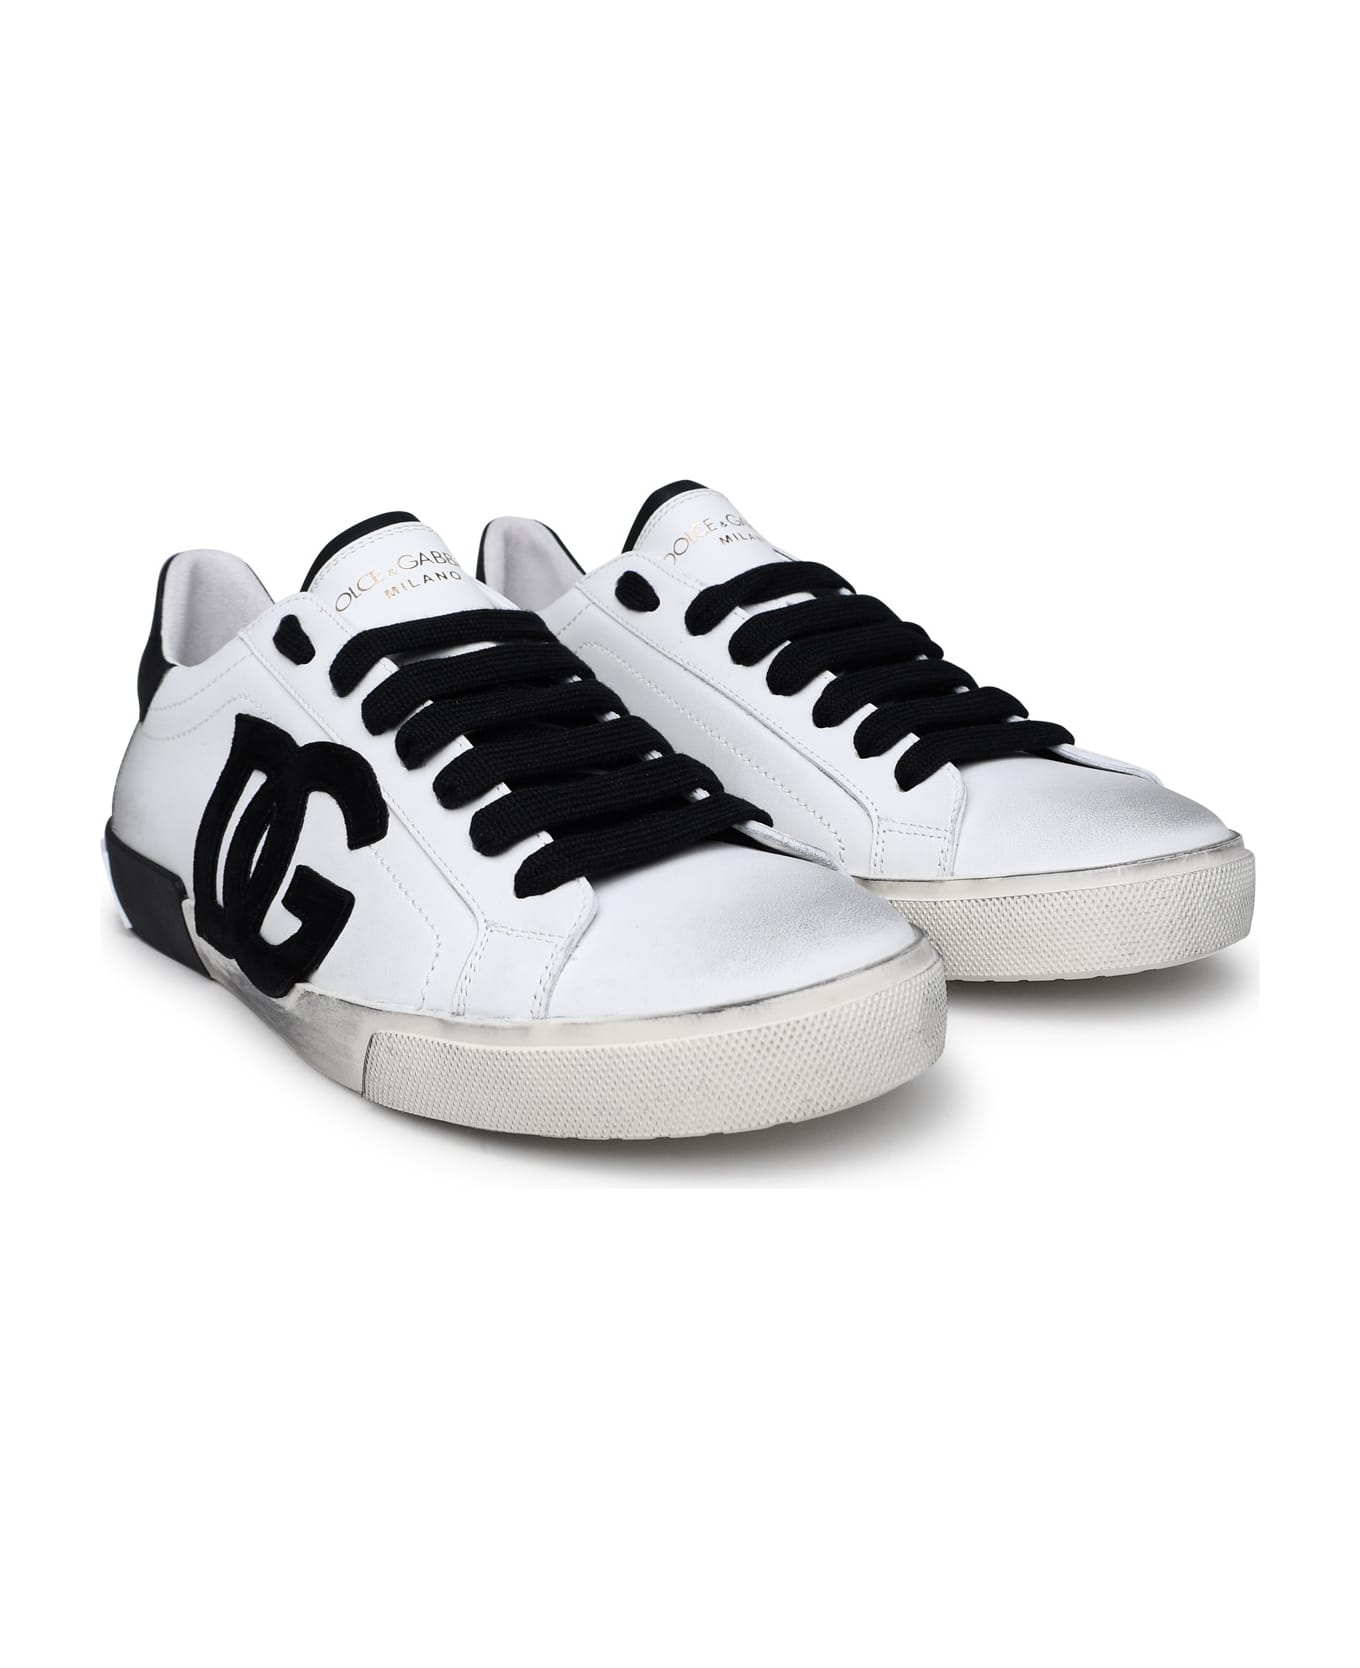 Dolce & Gabbana White Leather Sneakers - BIANCO/NERO